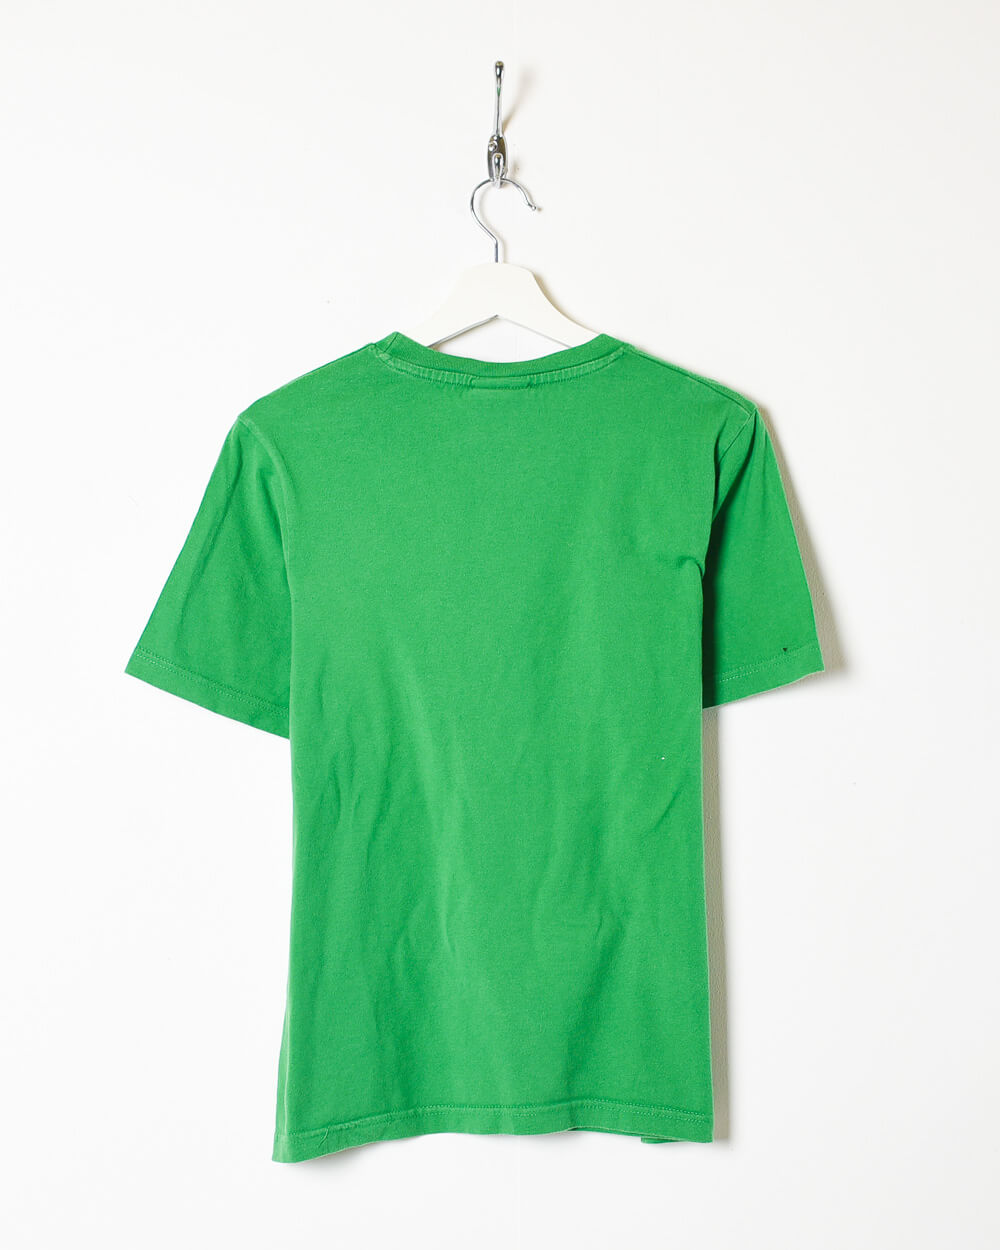 Green Nike T-Shirt - Small